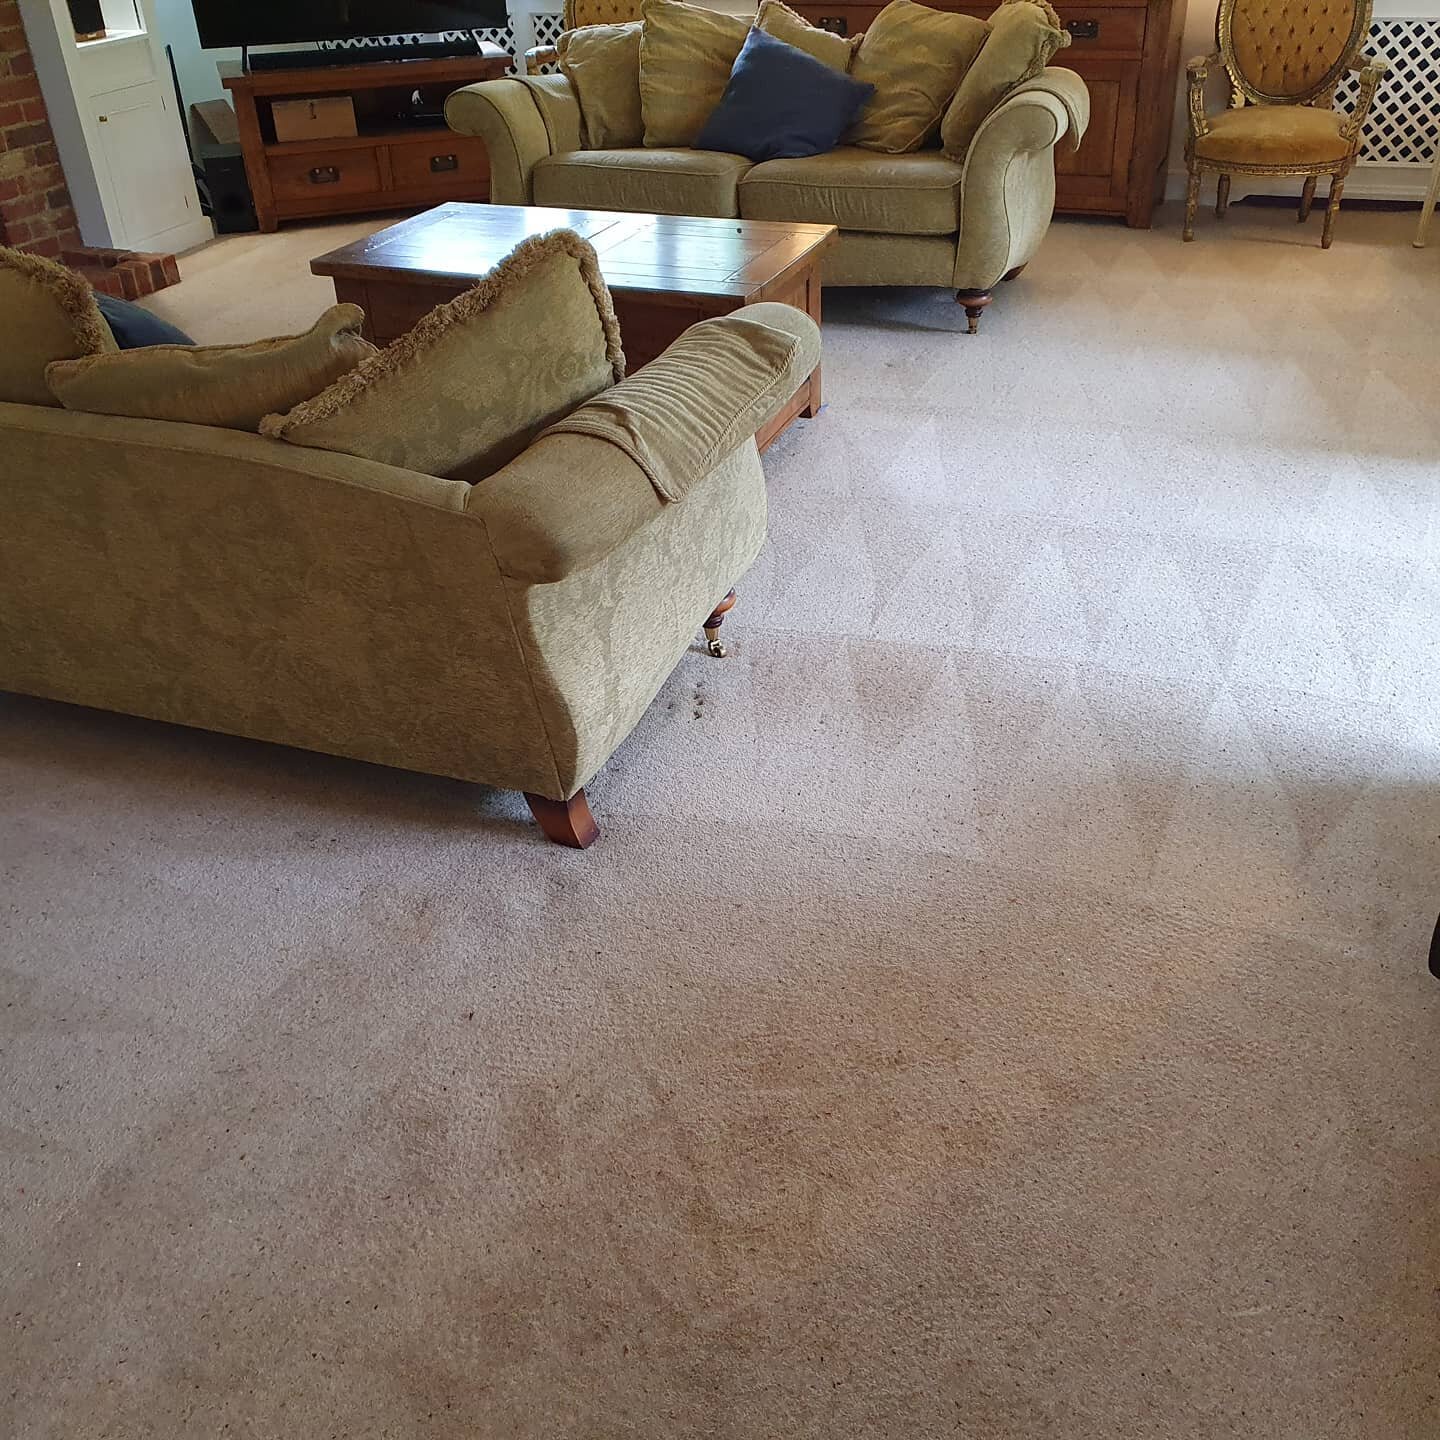 Carpet clean today in Fyfield, Essex.